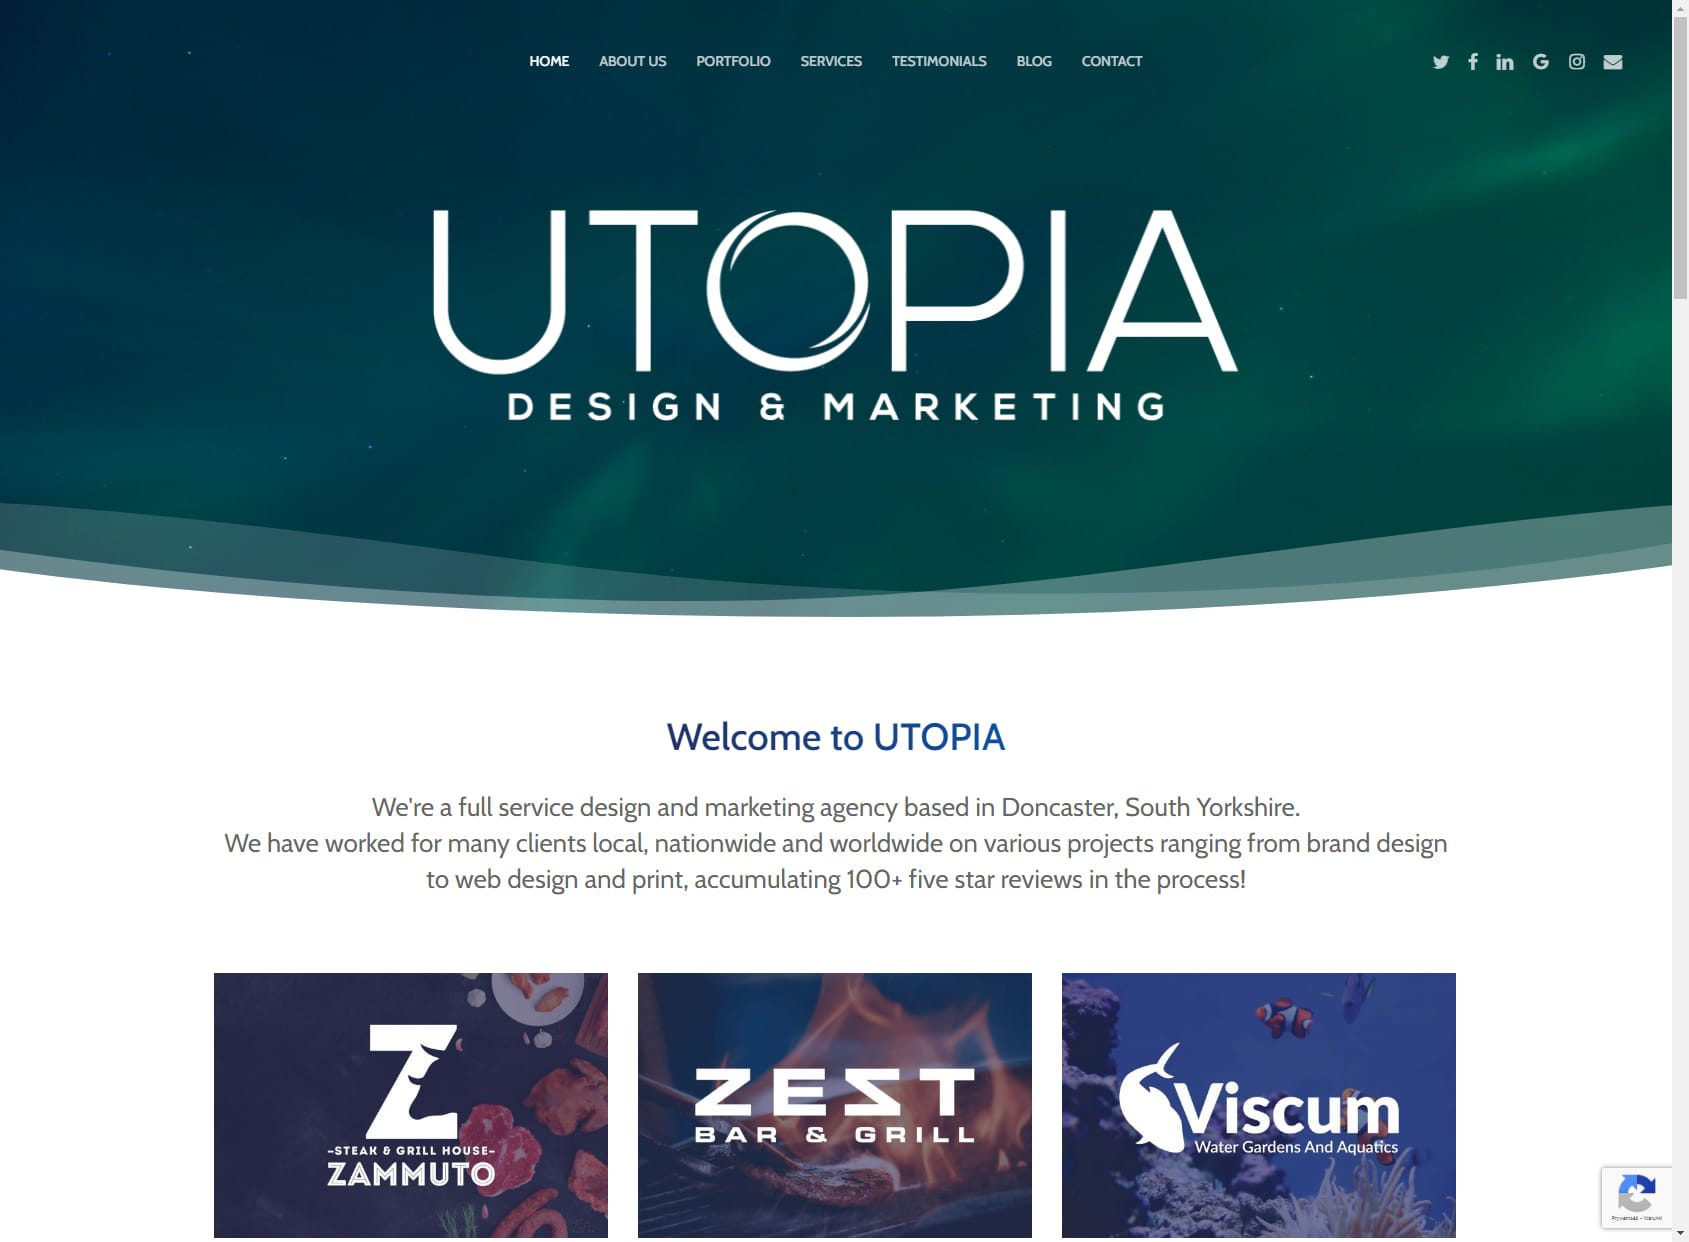 UTOPIA Design & Marketing